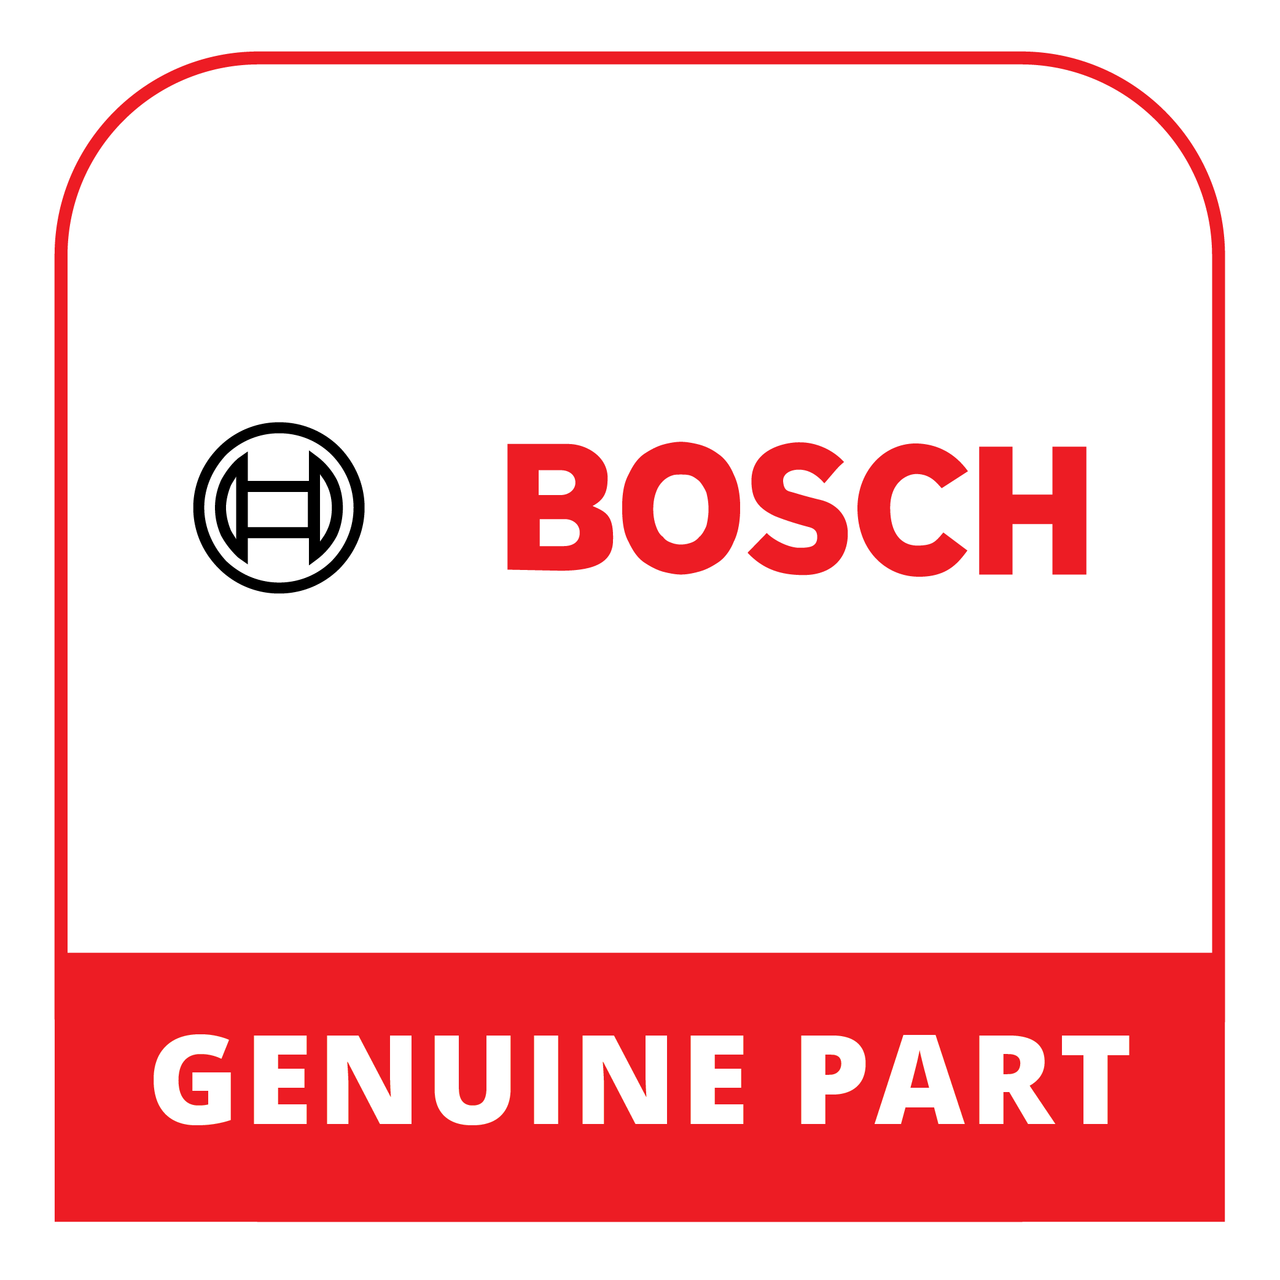 Bosch (Thermador) 20000035 - Panel-Facia - Genuine Bosch (Thermador) Part